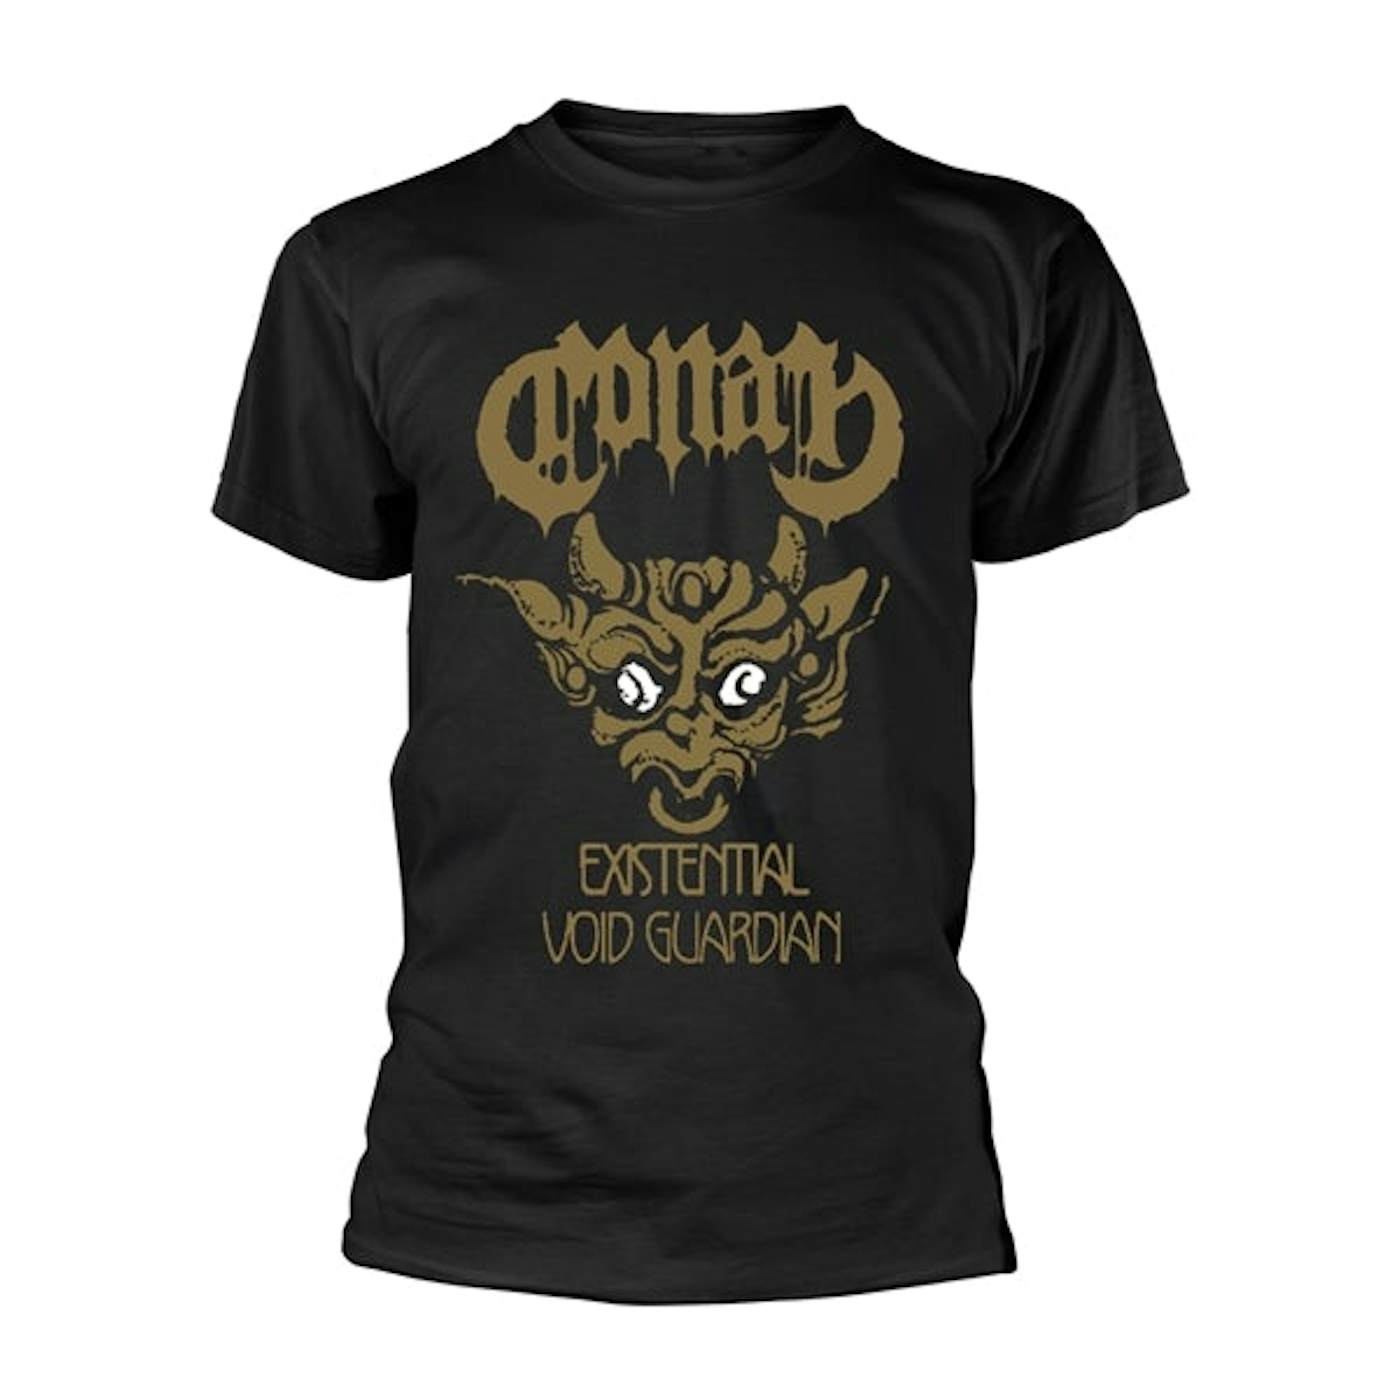 Conan T-Shirt - Existential Void Guardian